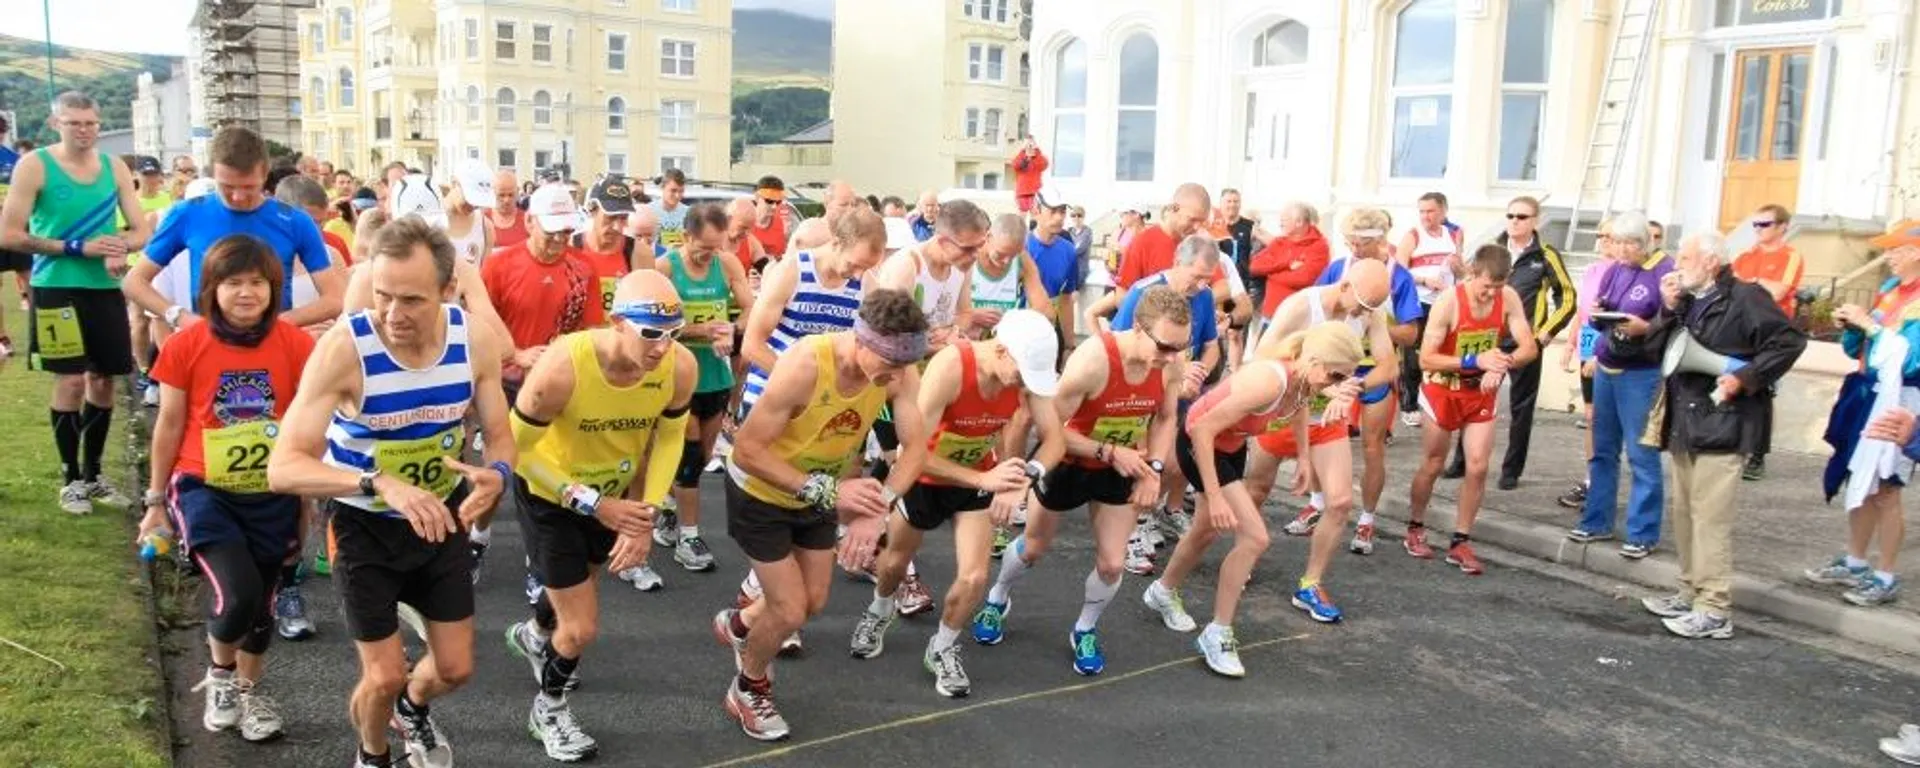 Microgaming Isle of Man Marathon & Half Marathon